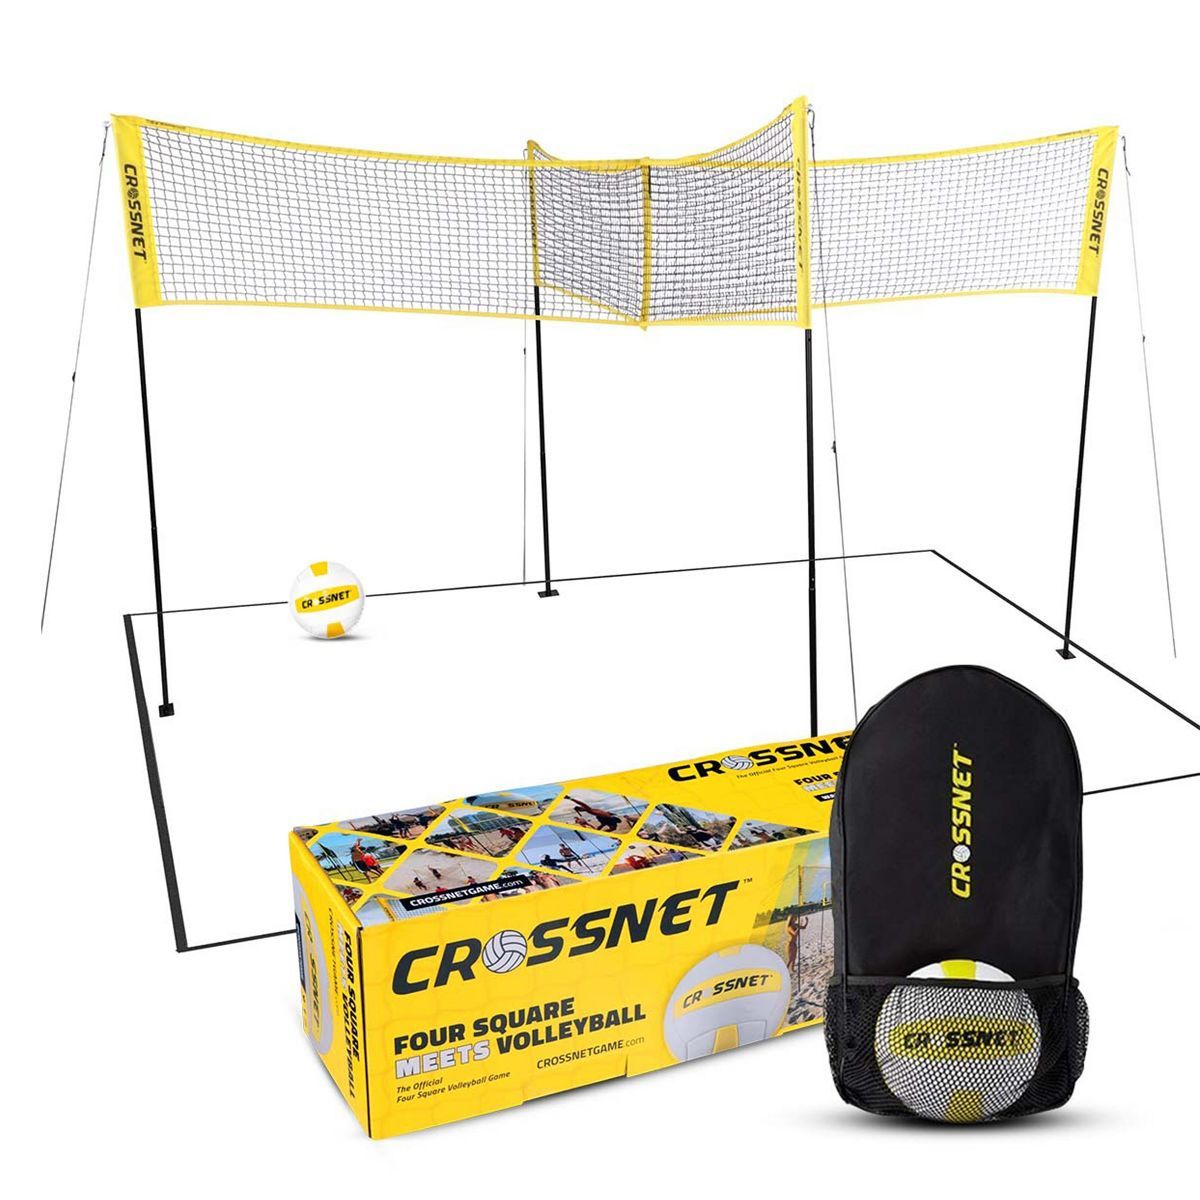 CROSSNET Original 4 Square Volleyball Net and Backyard Yard Gameset - Yellow | Target